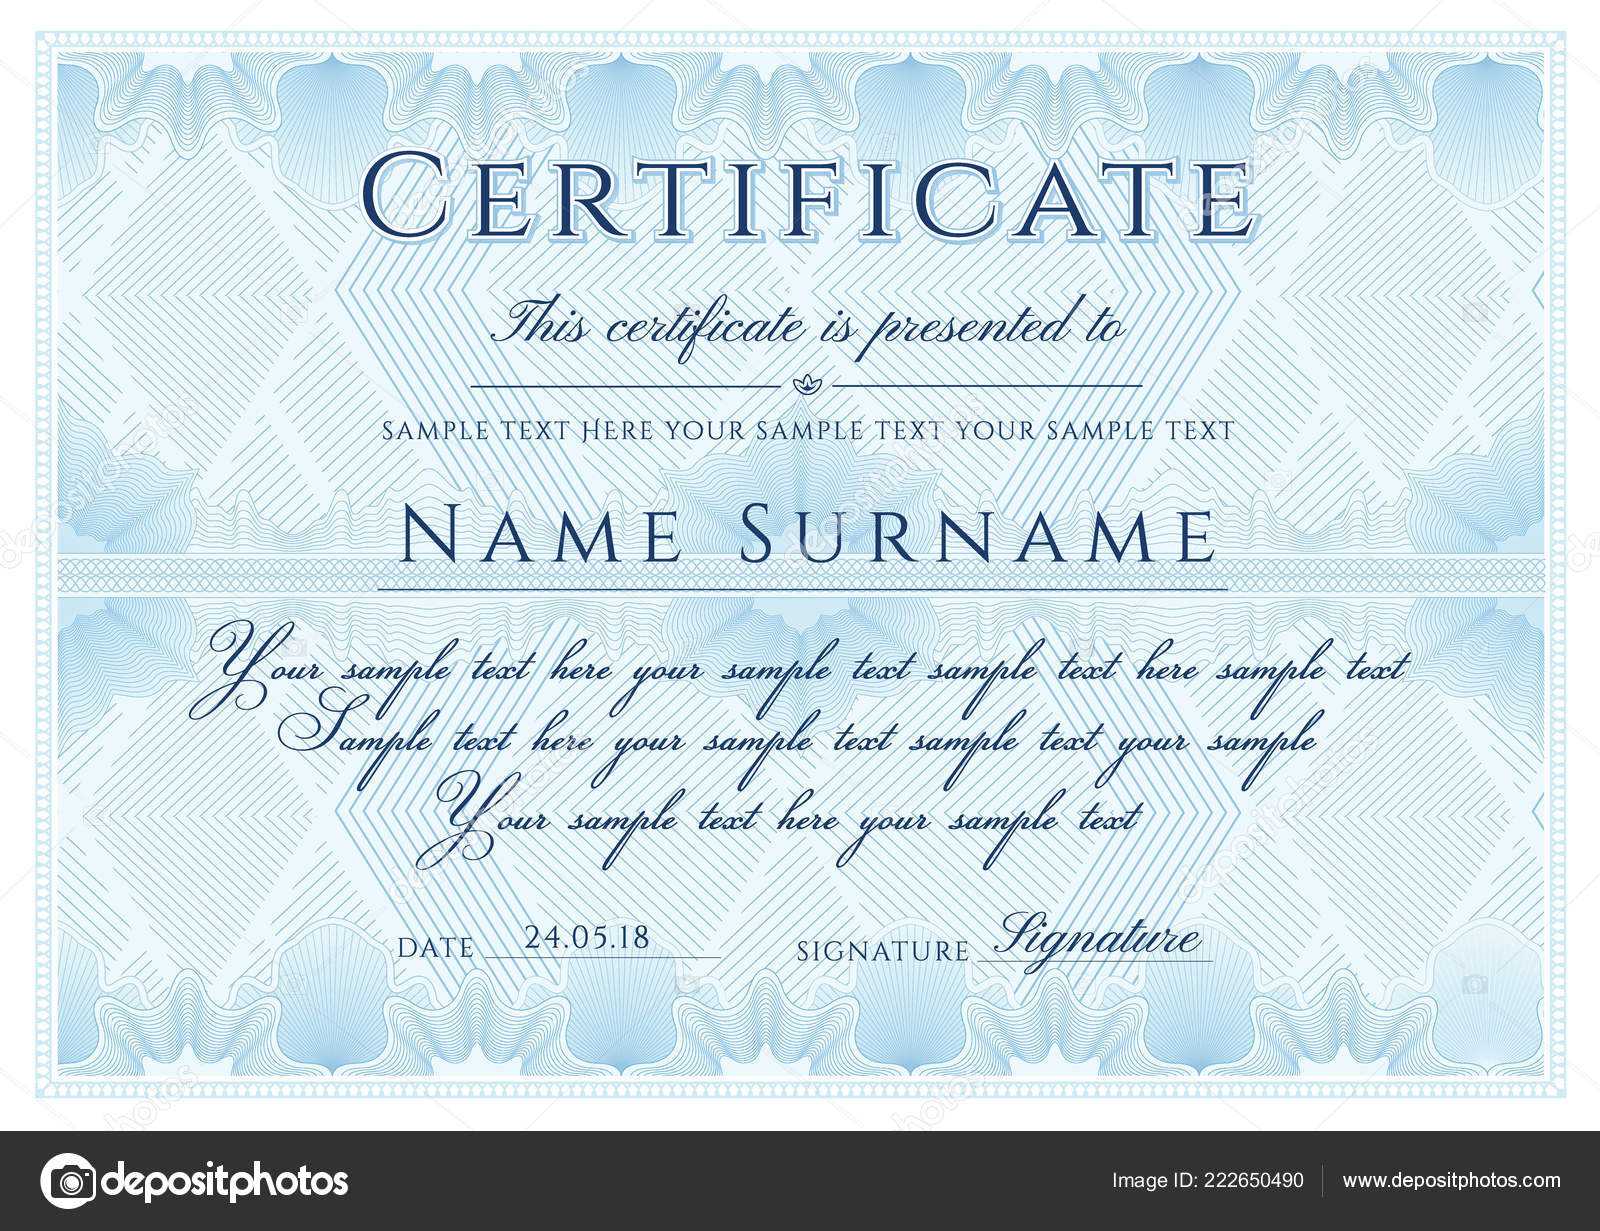 Formal Certificate Template | Certificate Template Formal Inside Formal Certificate Of Appreciation Template